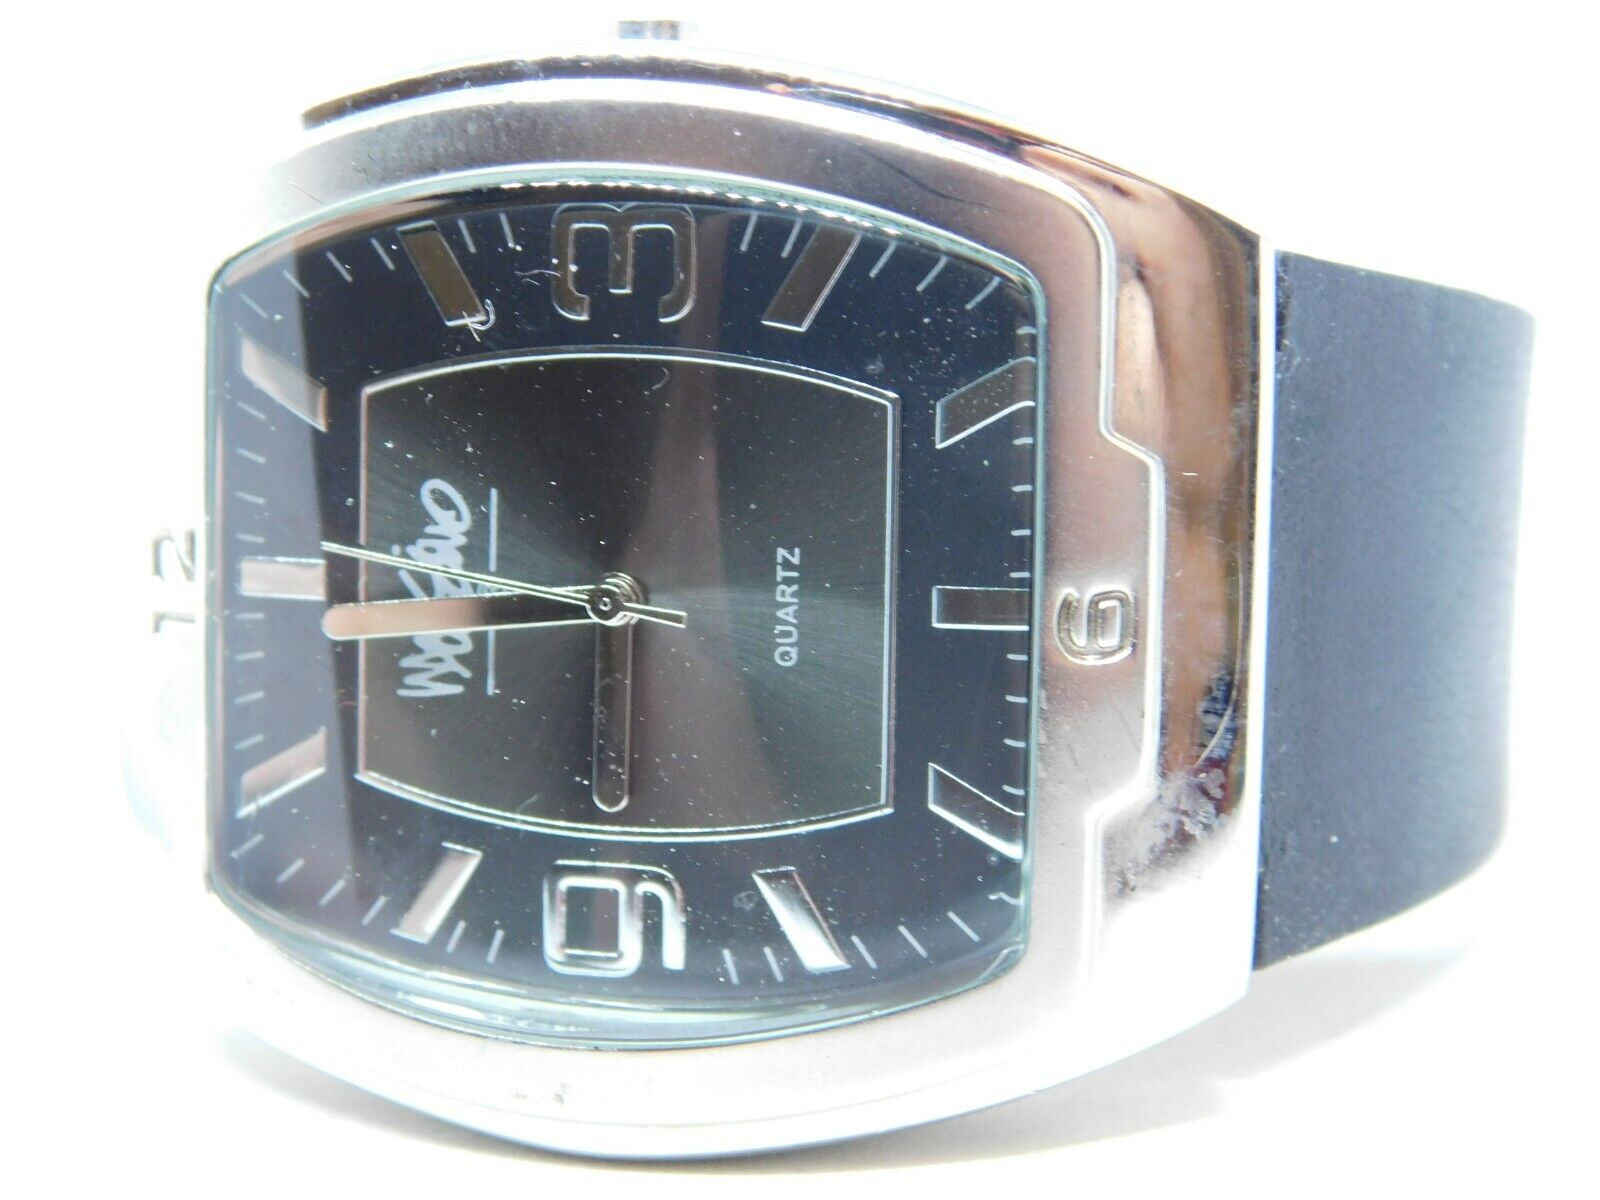 Mossimo MM90229 Genuine Leather Quartz Analog Men's Watch